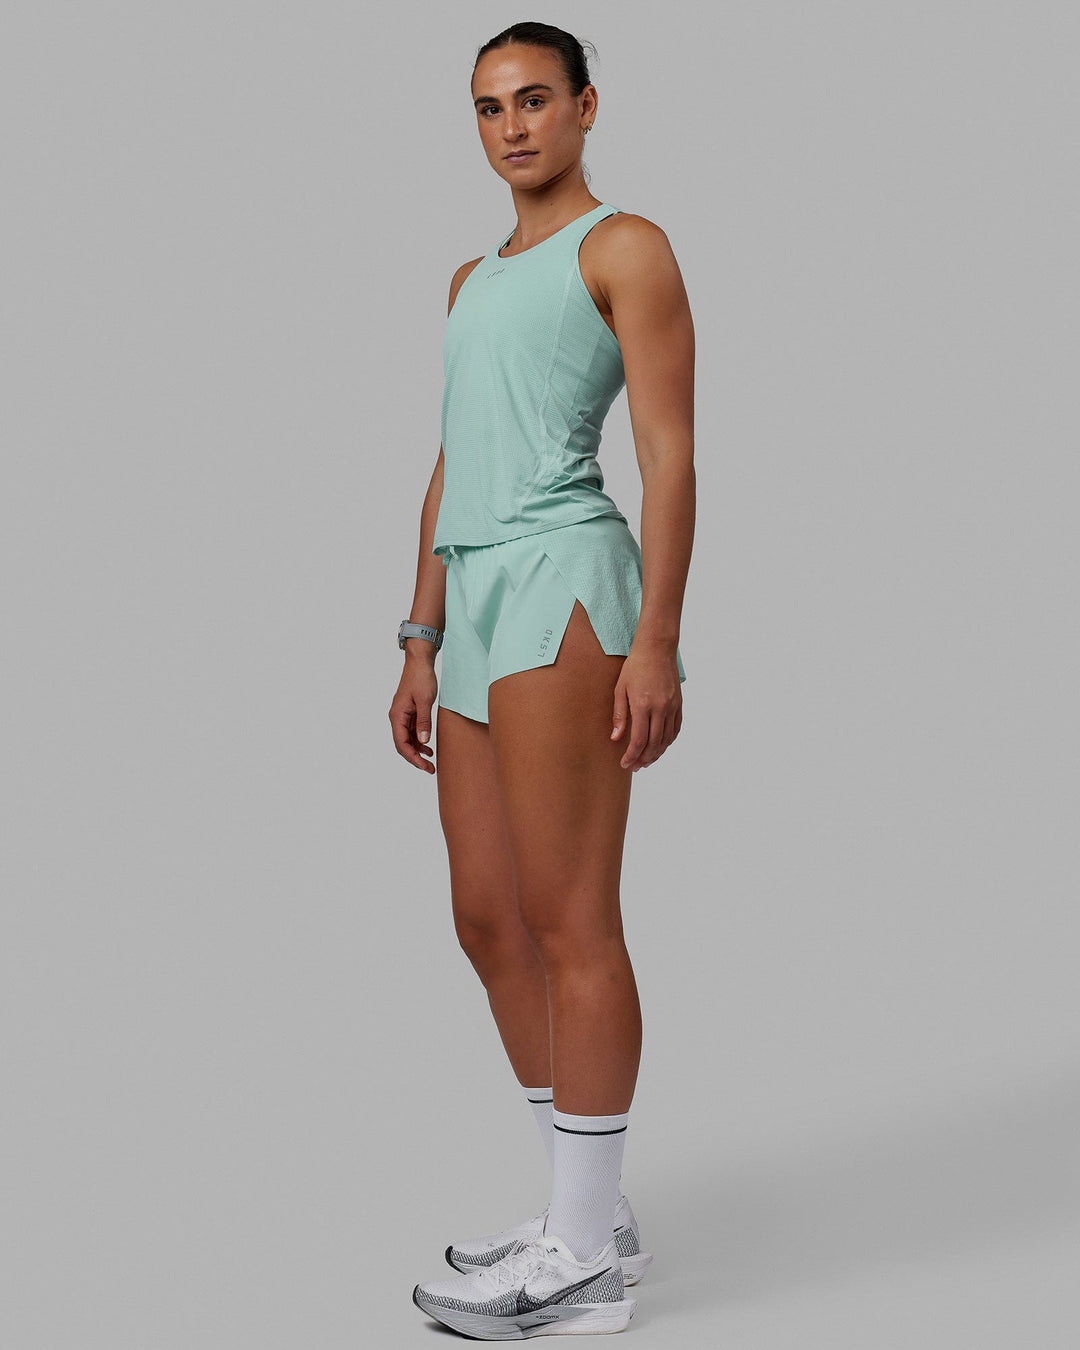 Woman wearing Accelerate Performance Tank - Pastel Turquoise